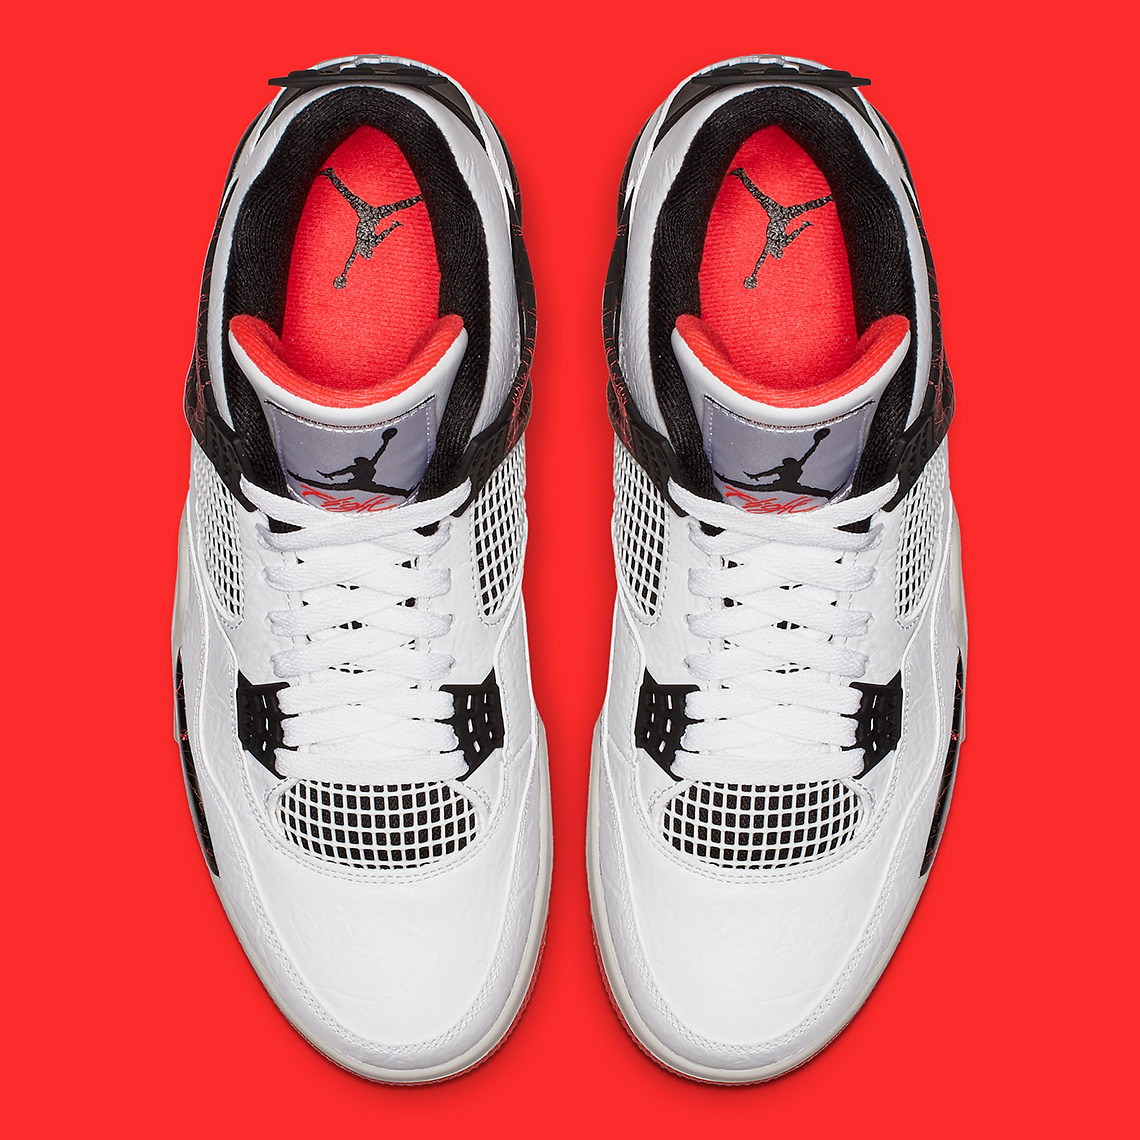 Tom Audreath Statistisk snorkel Air Jordan 4 "Hot Lava" Release Details